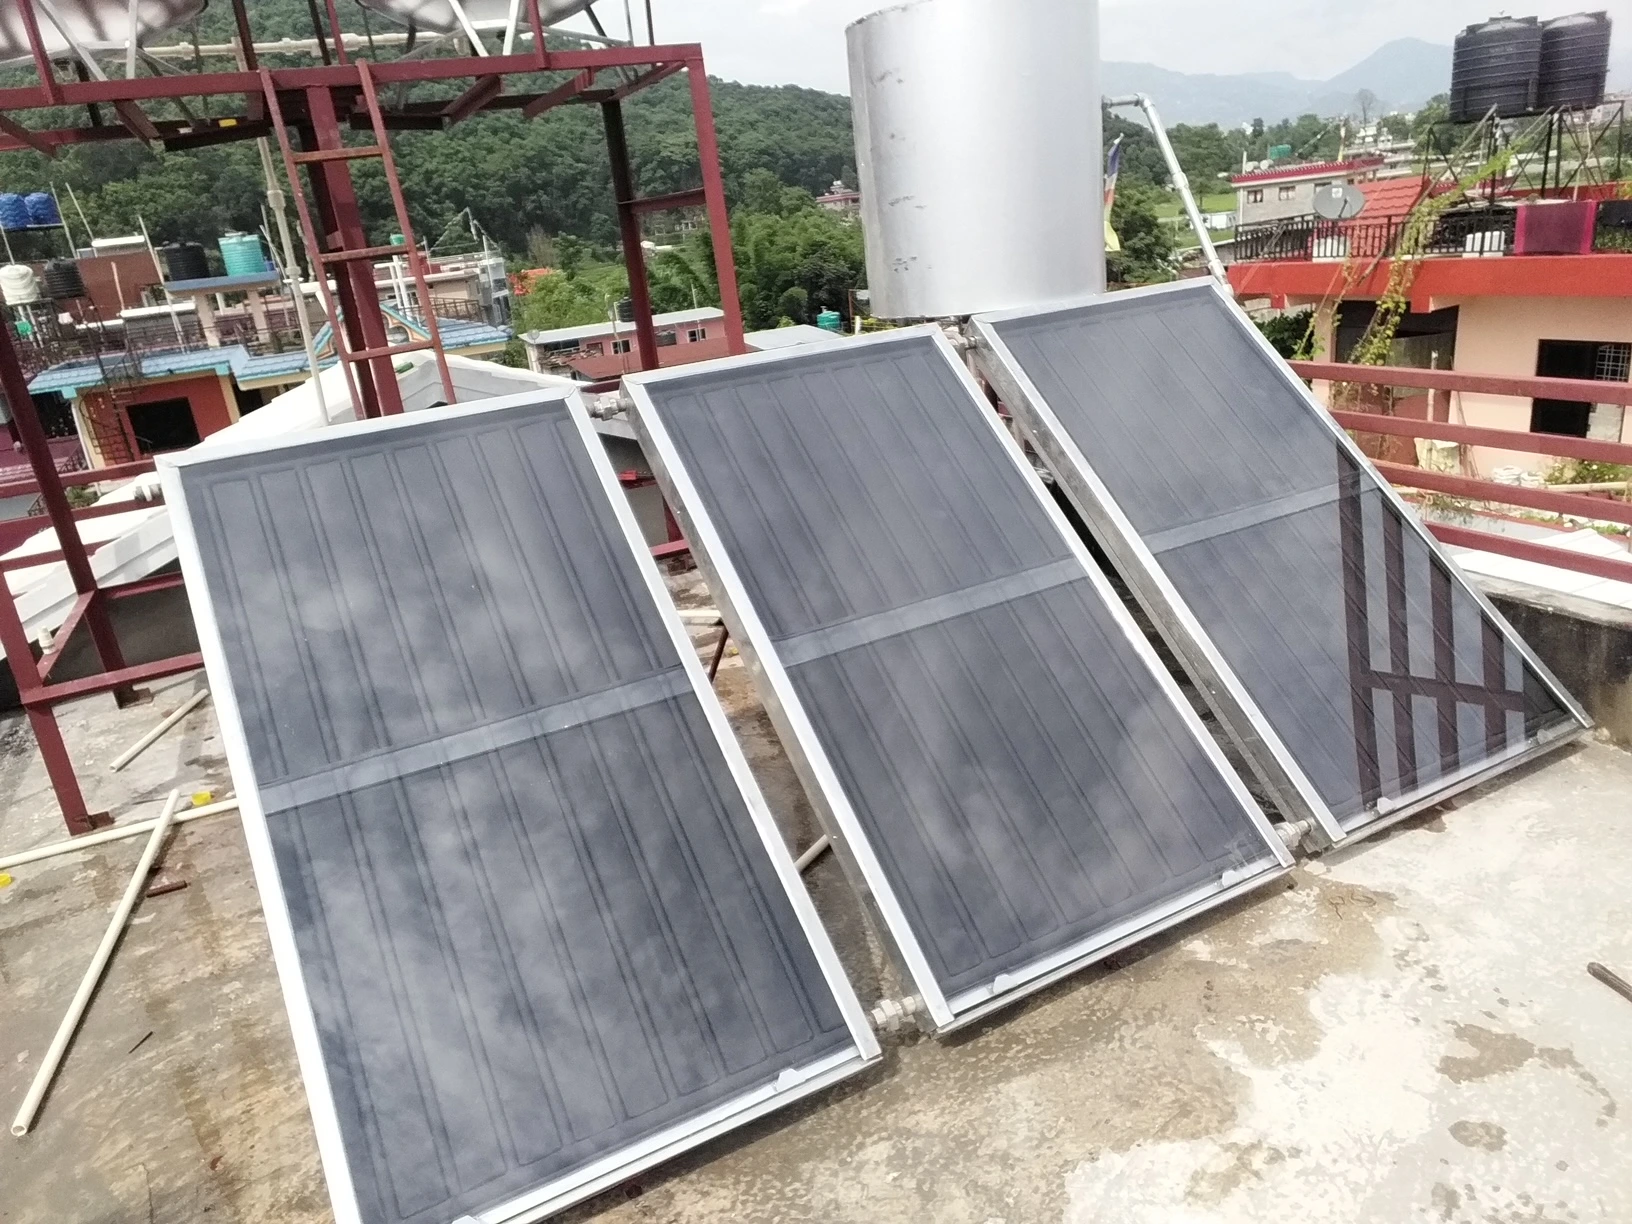 Solar-Powered Heating System